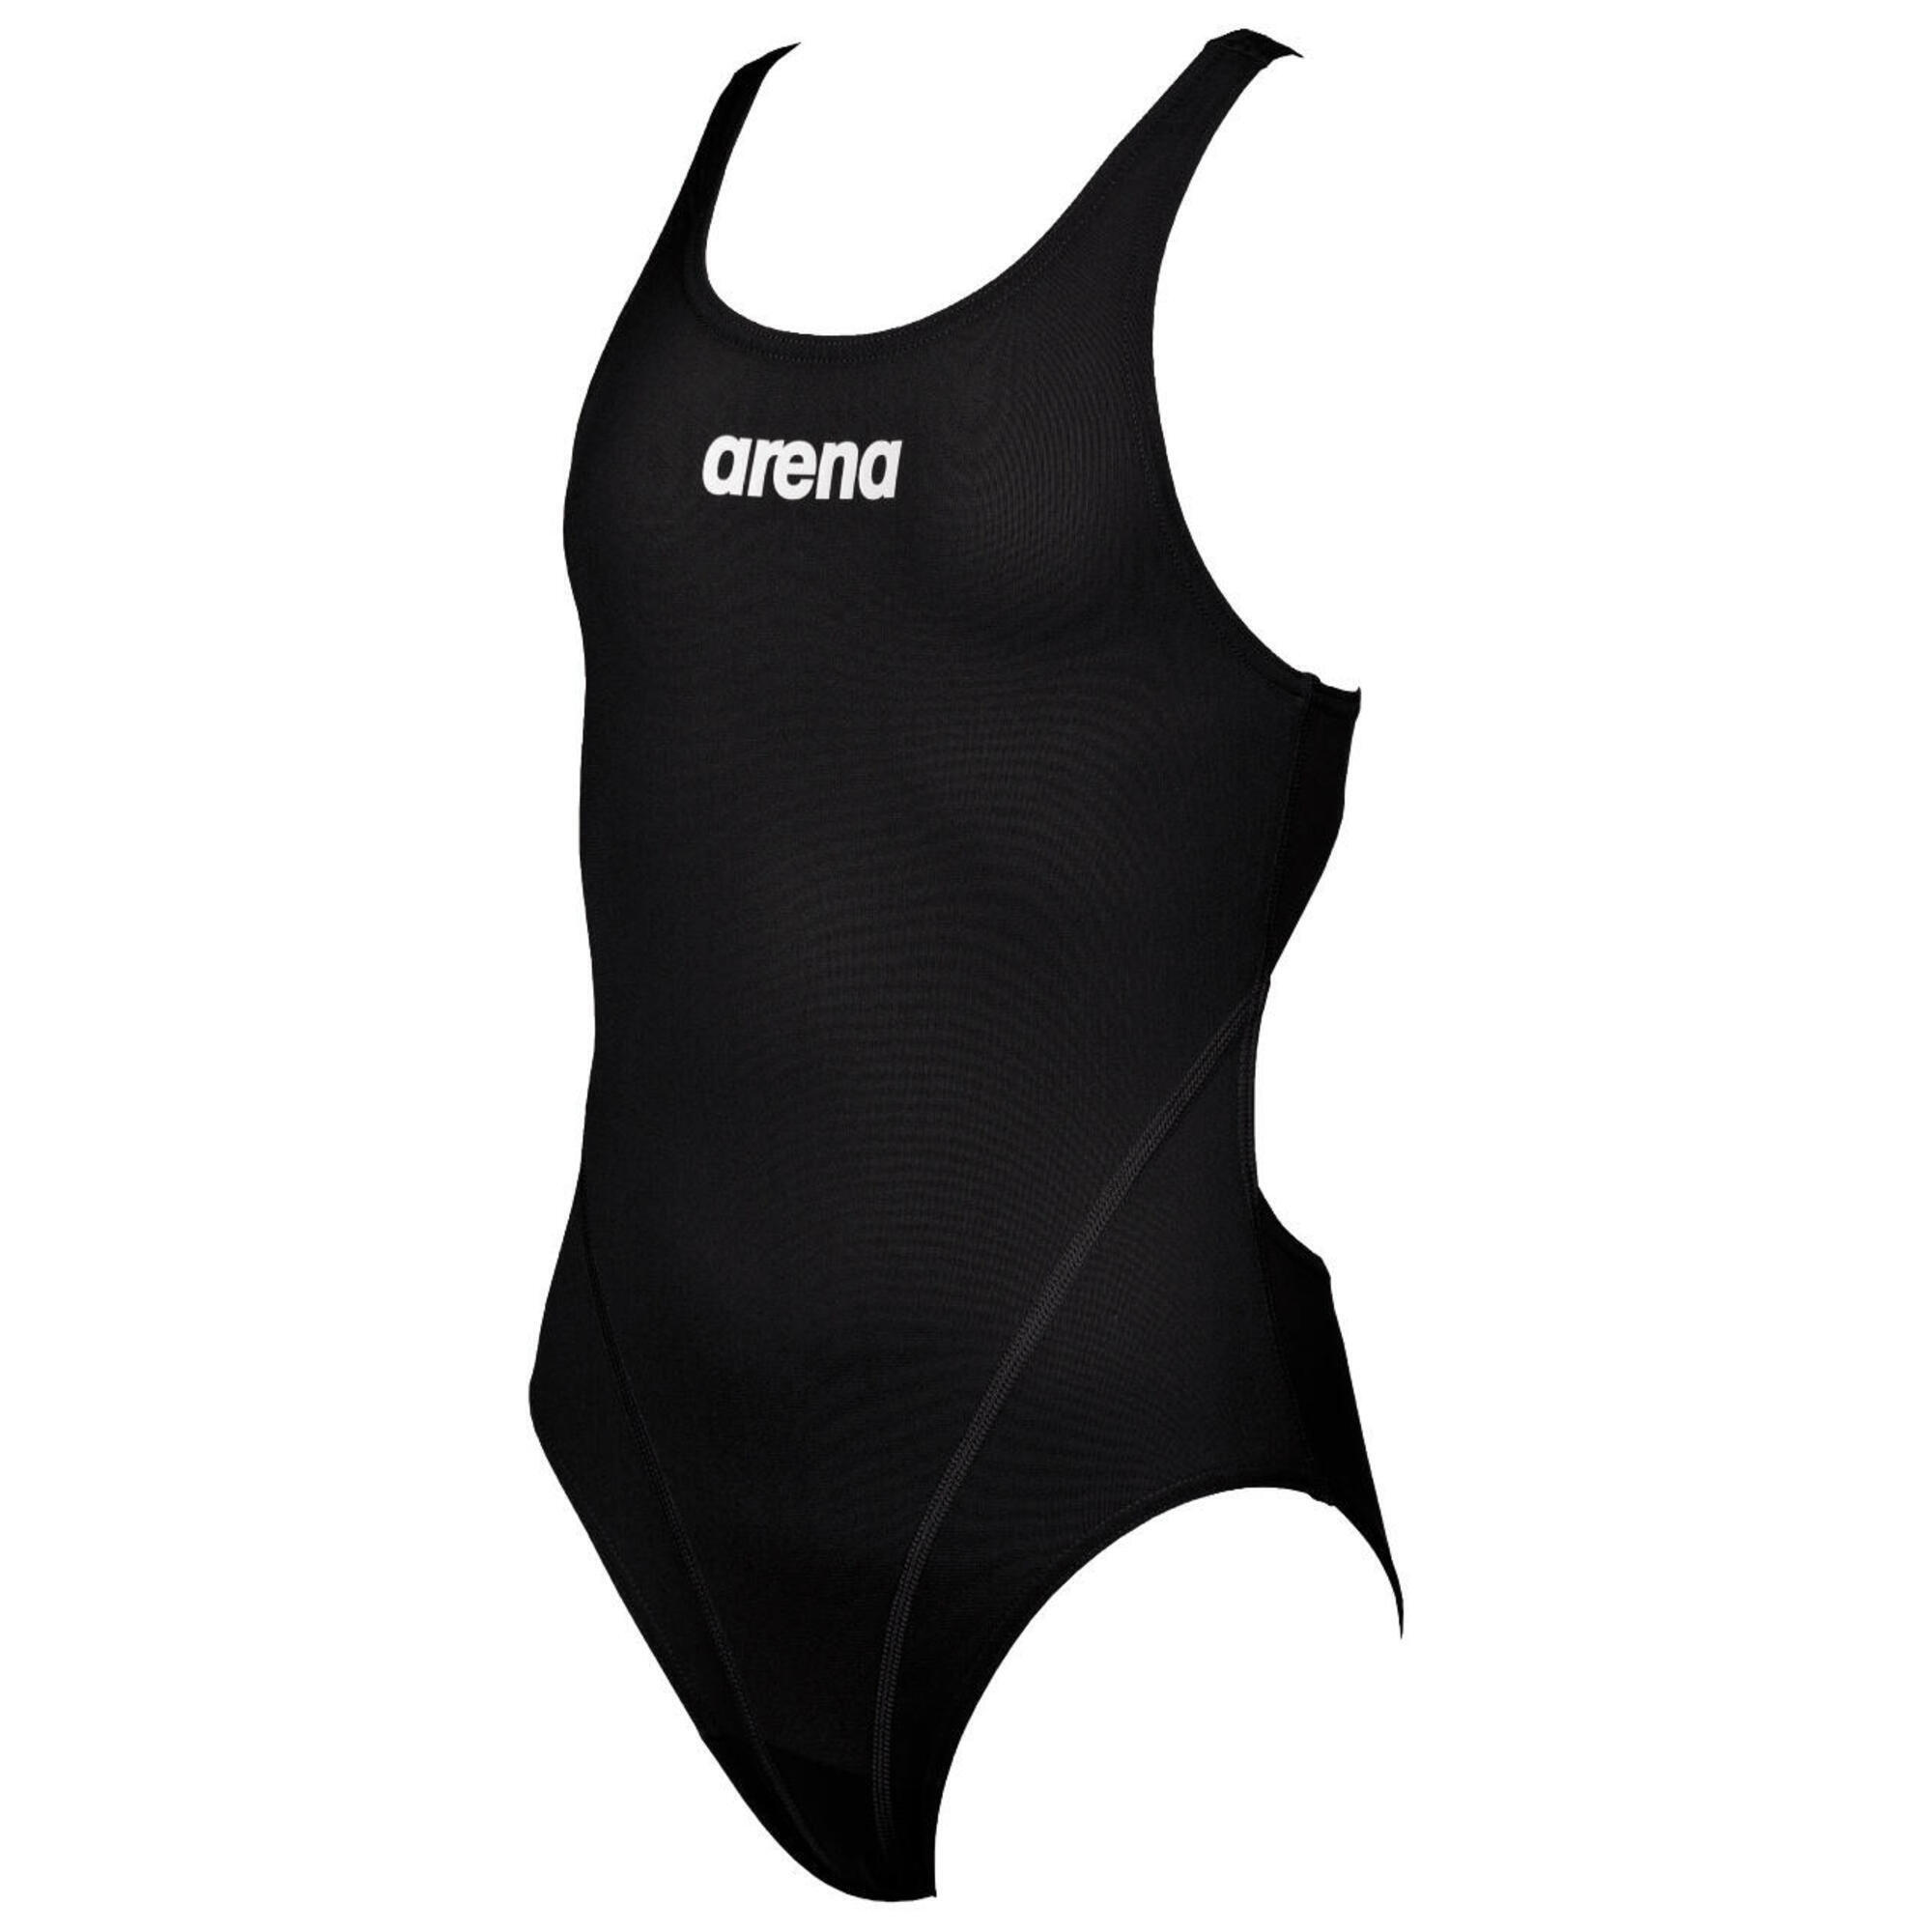 arena Girls Sports Swimsuit Solid Swim Tech, Black-White 1/5